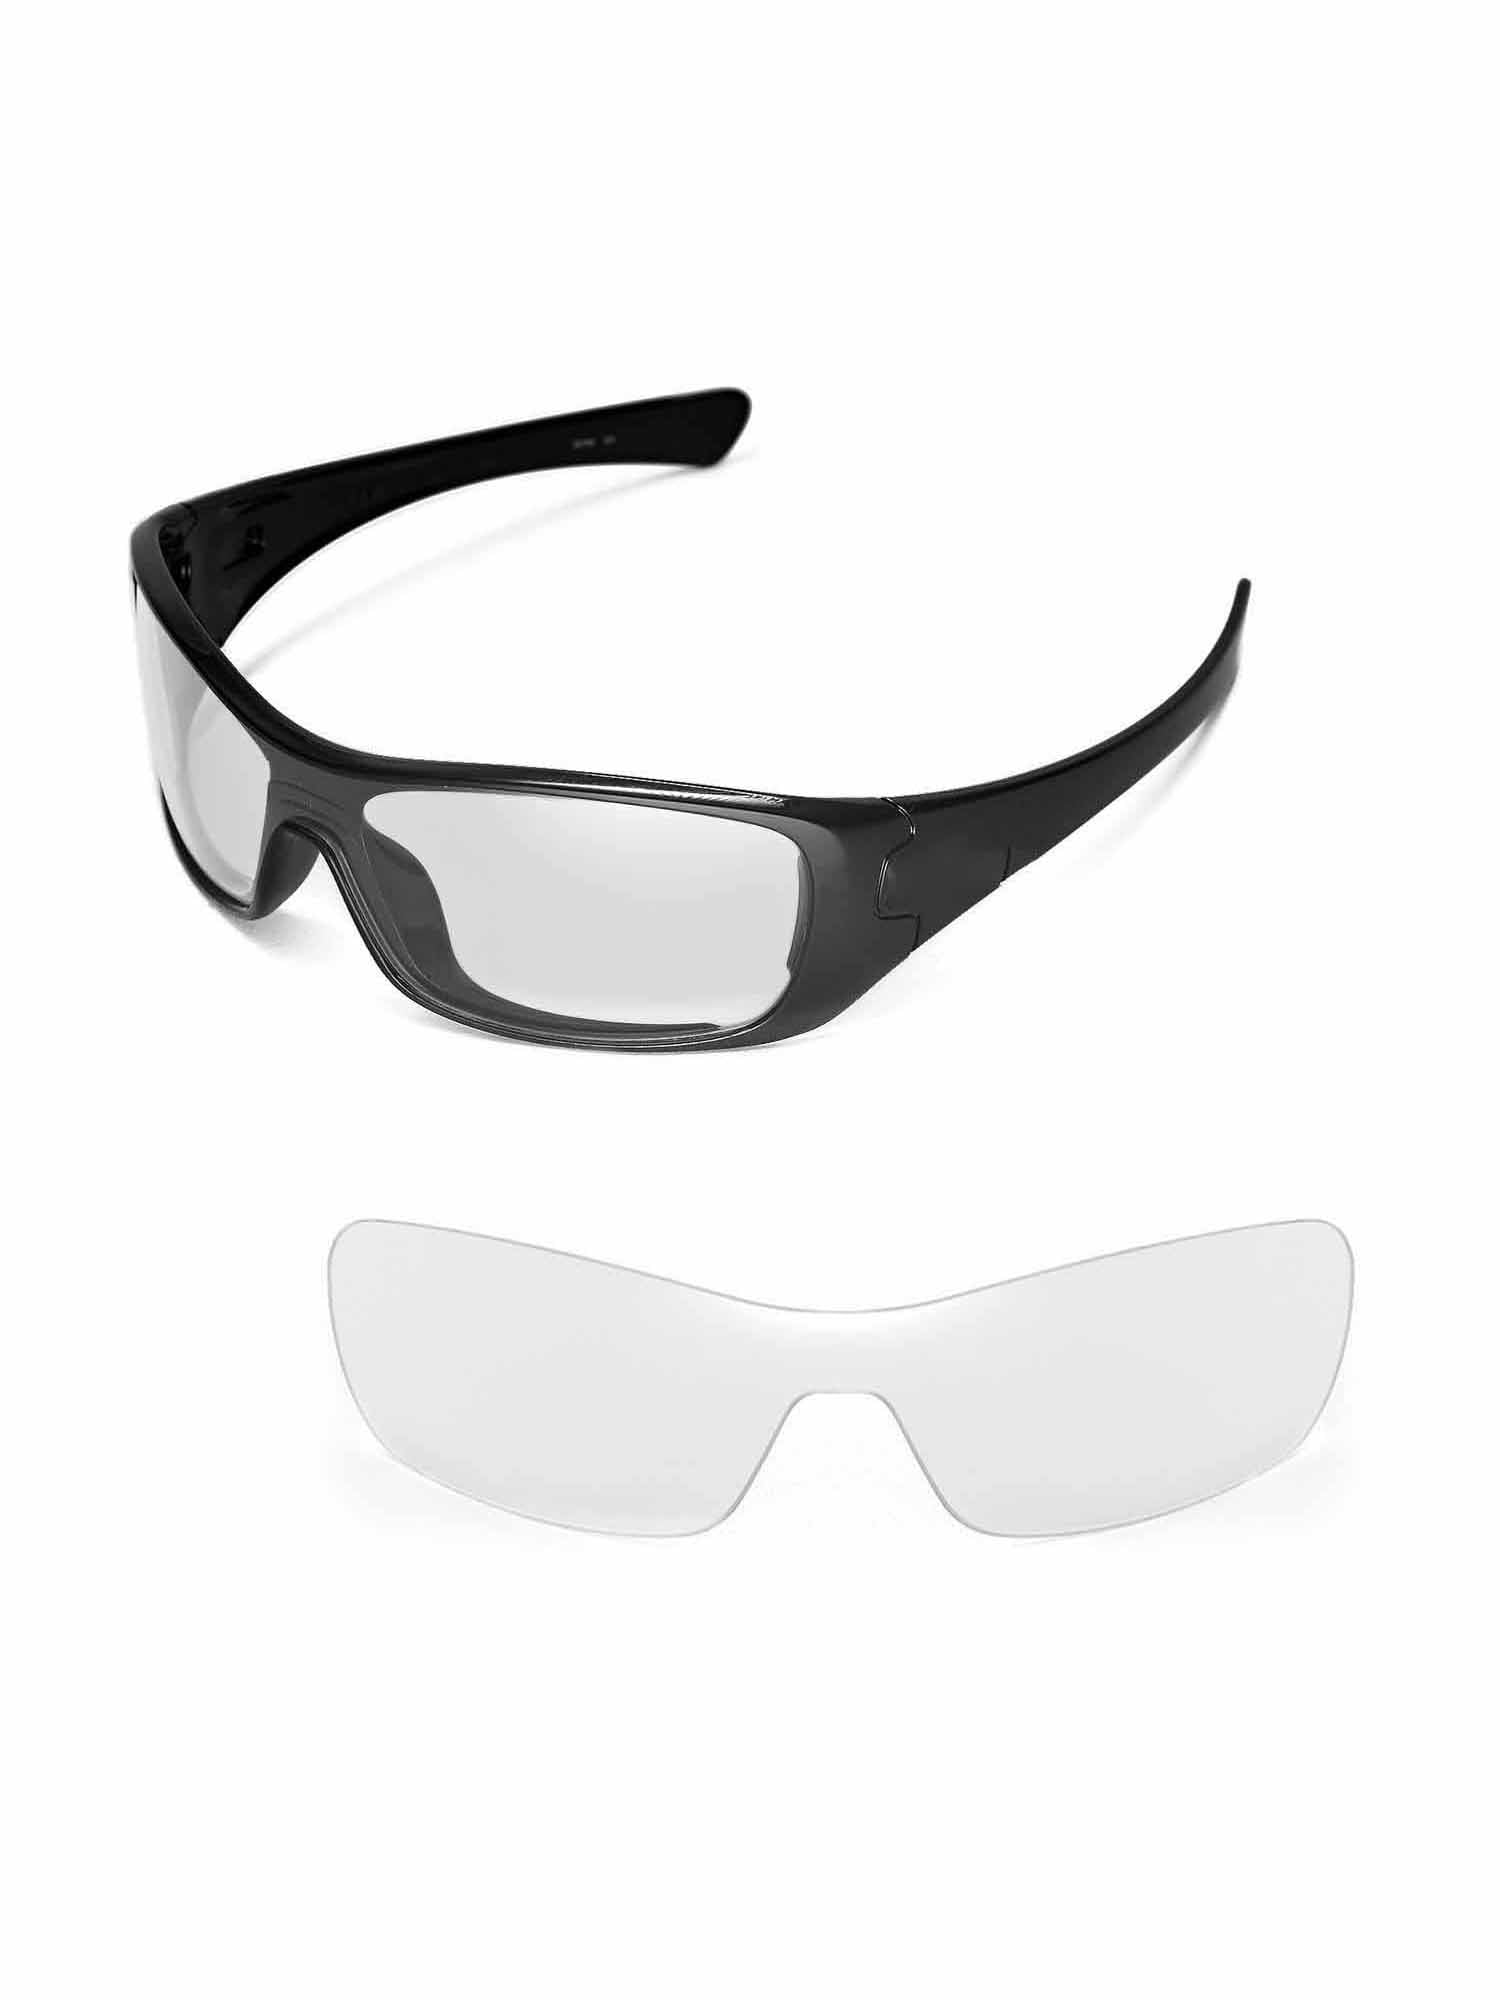 Walleva Clear Replacement Lenses for Oakley Antix Sunglasses - Walmart.com